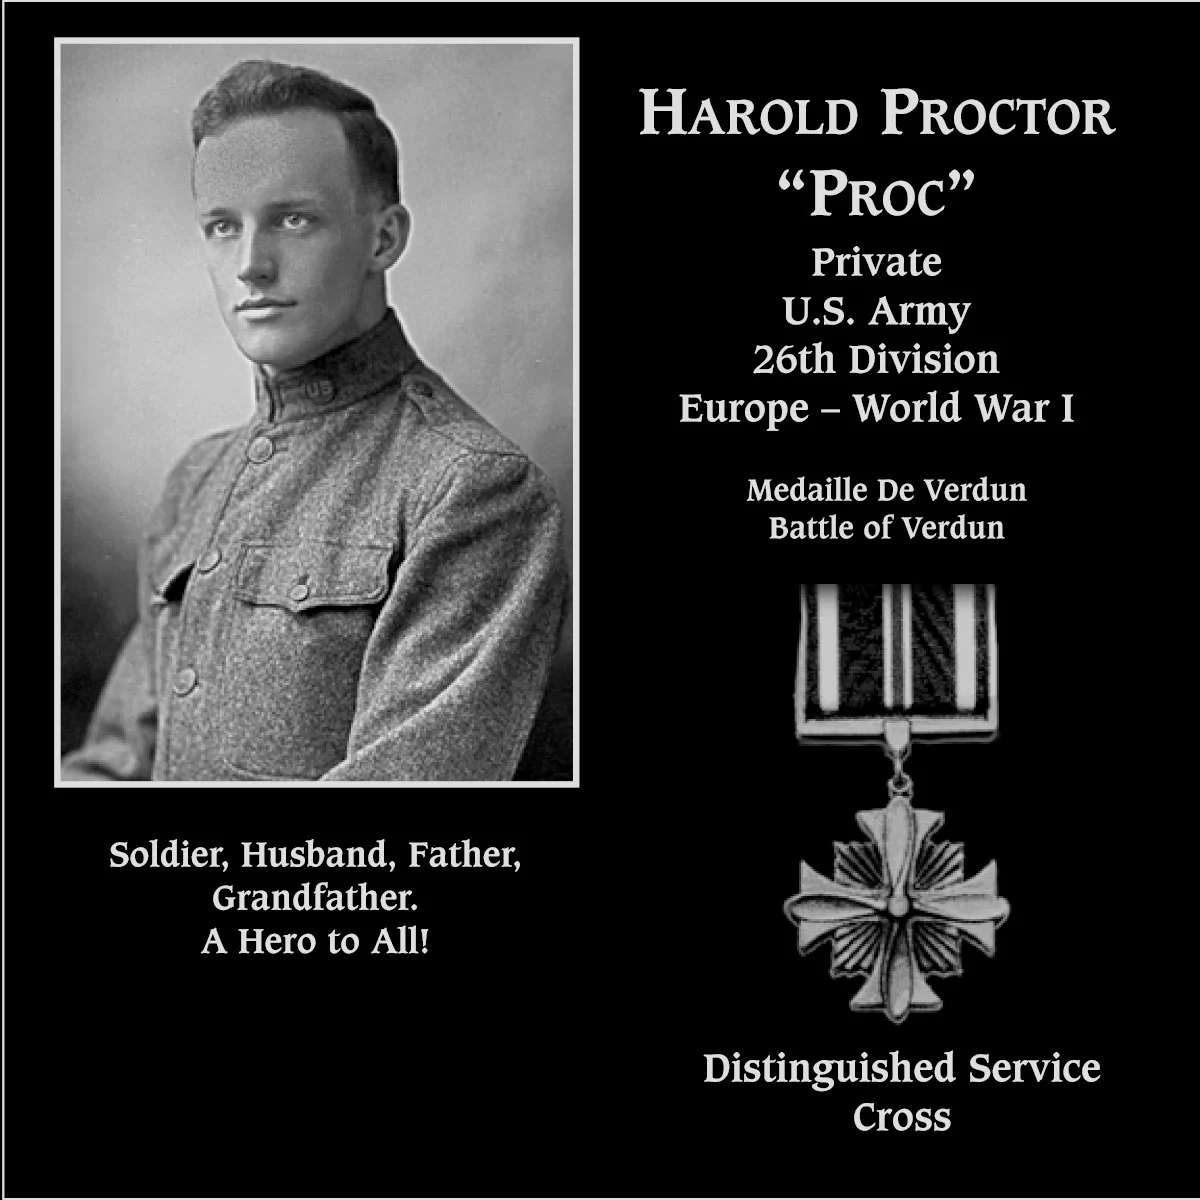 Harold “Proc” Proctor